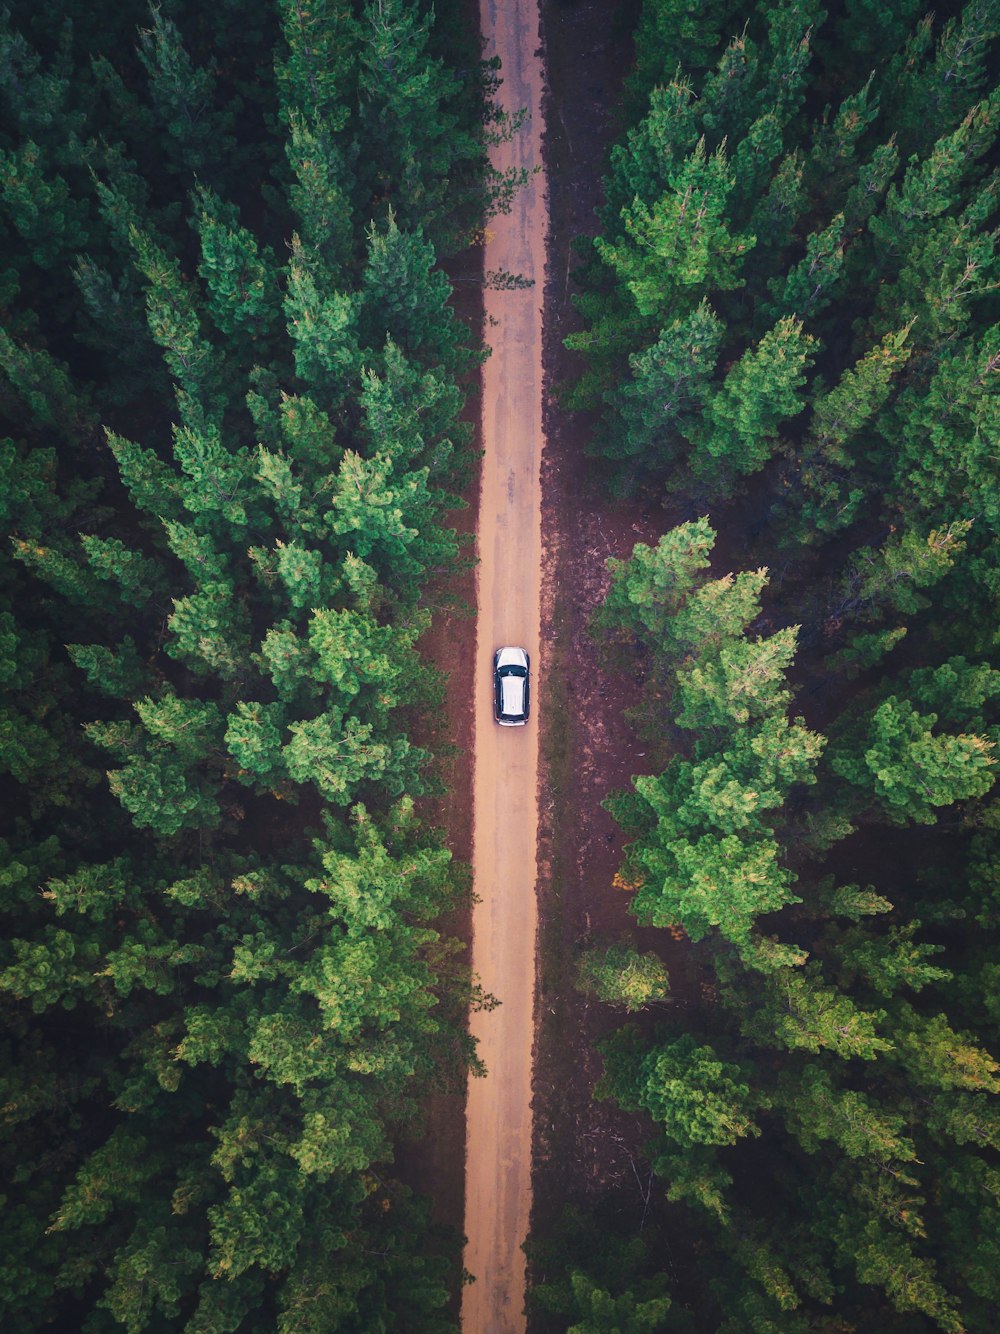 vehicle on road between trees